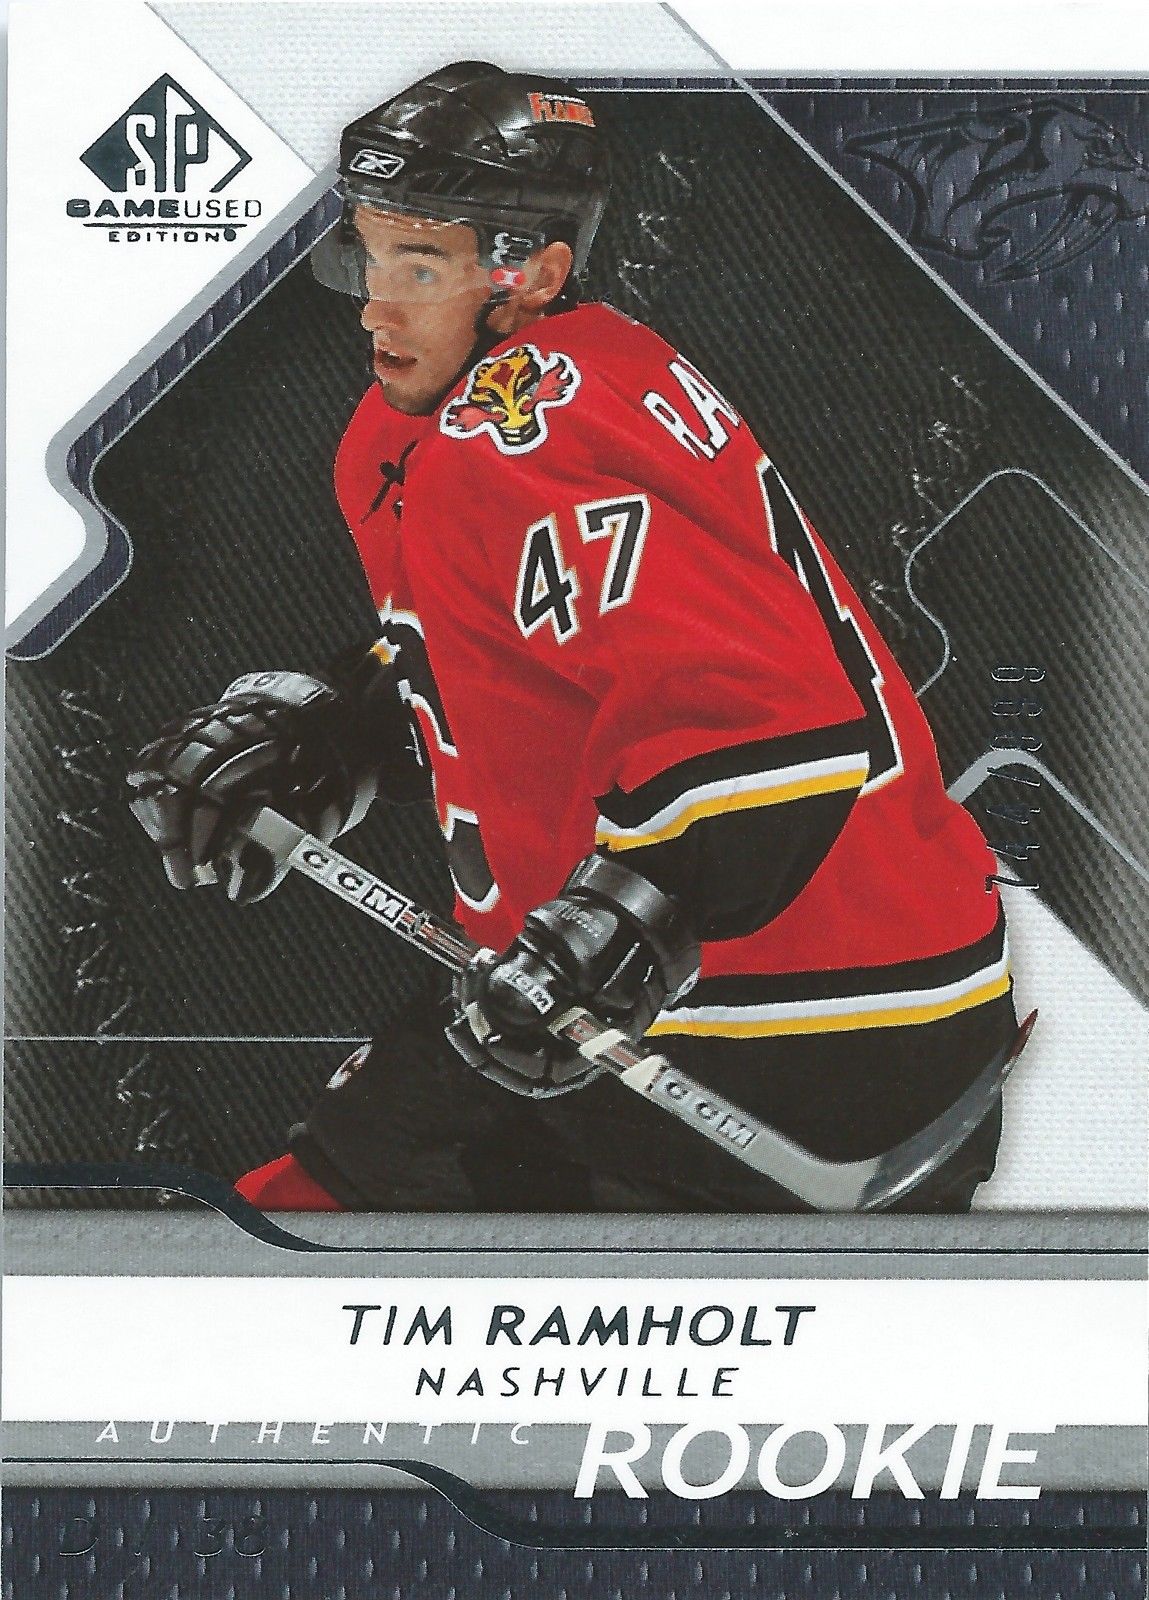  2008-09 SP Game Used TIM RAMHOLT Rookie /999 Upper Deck RC NHL 00995  Image 1